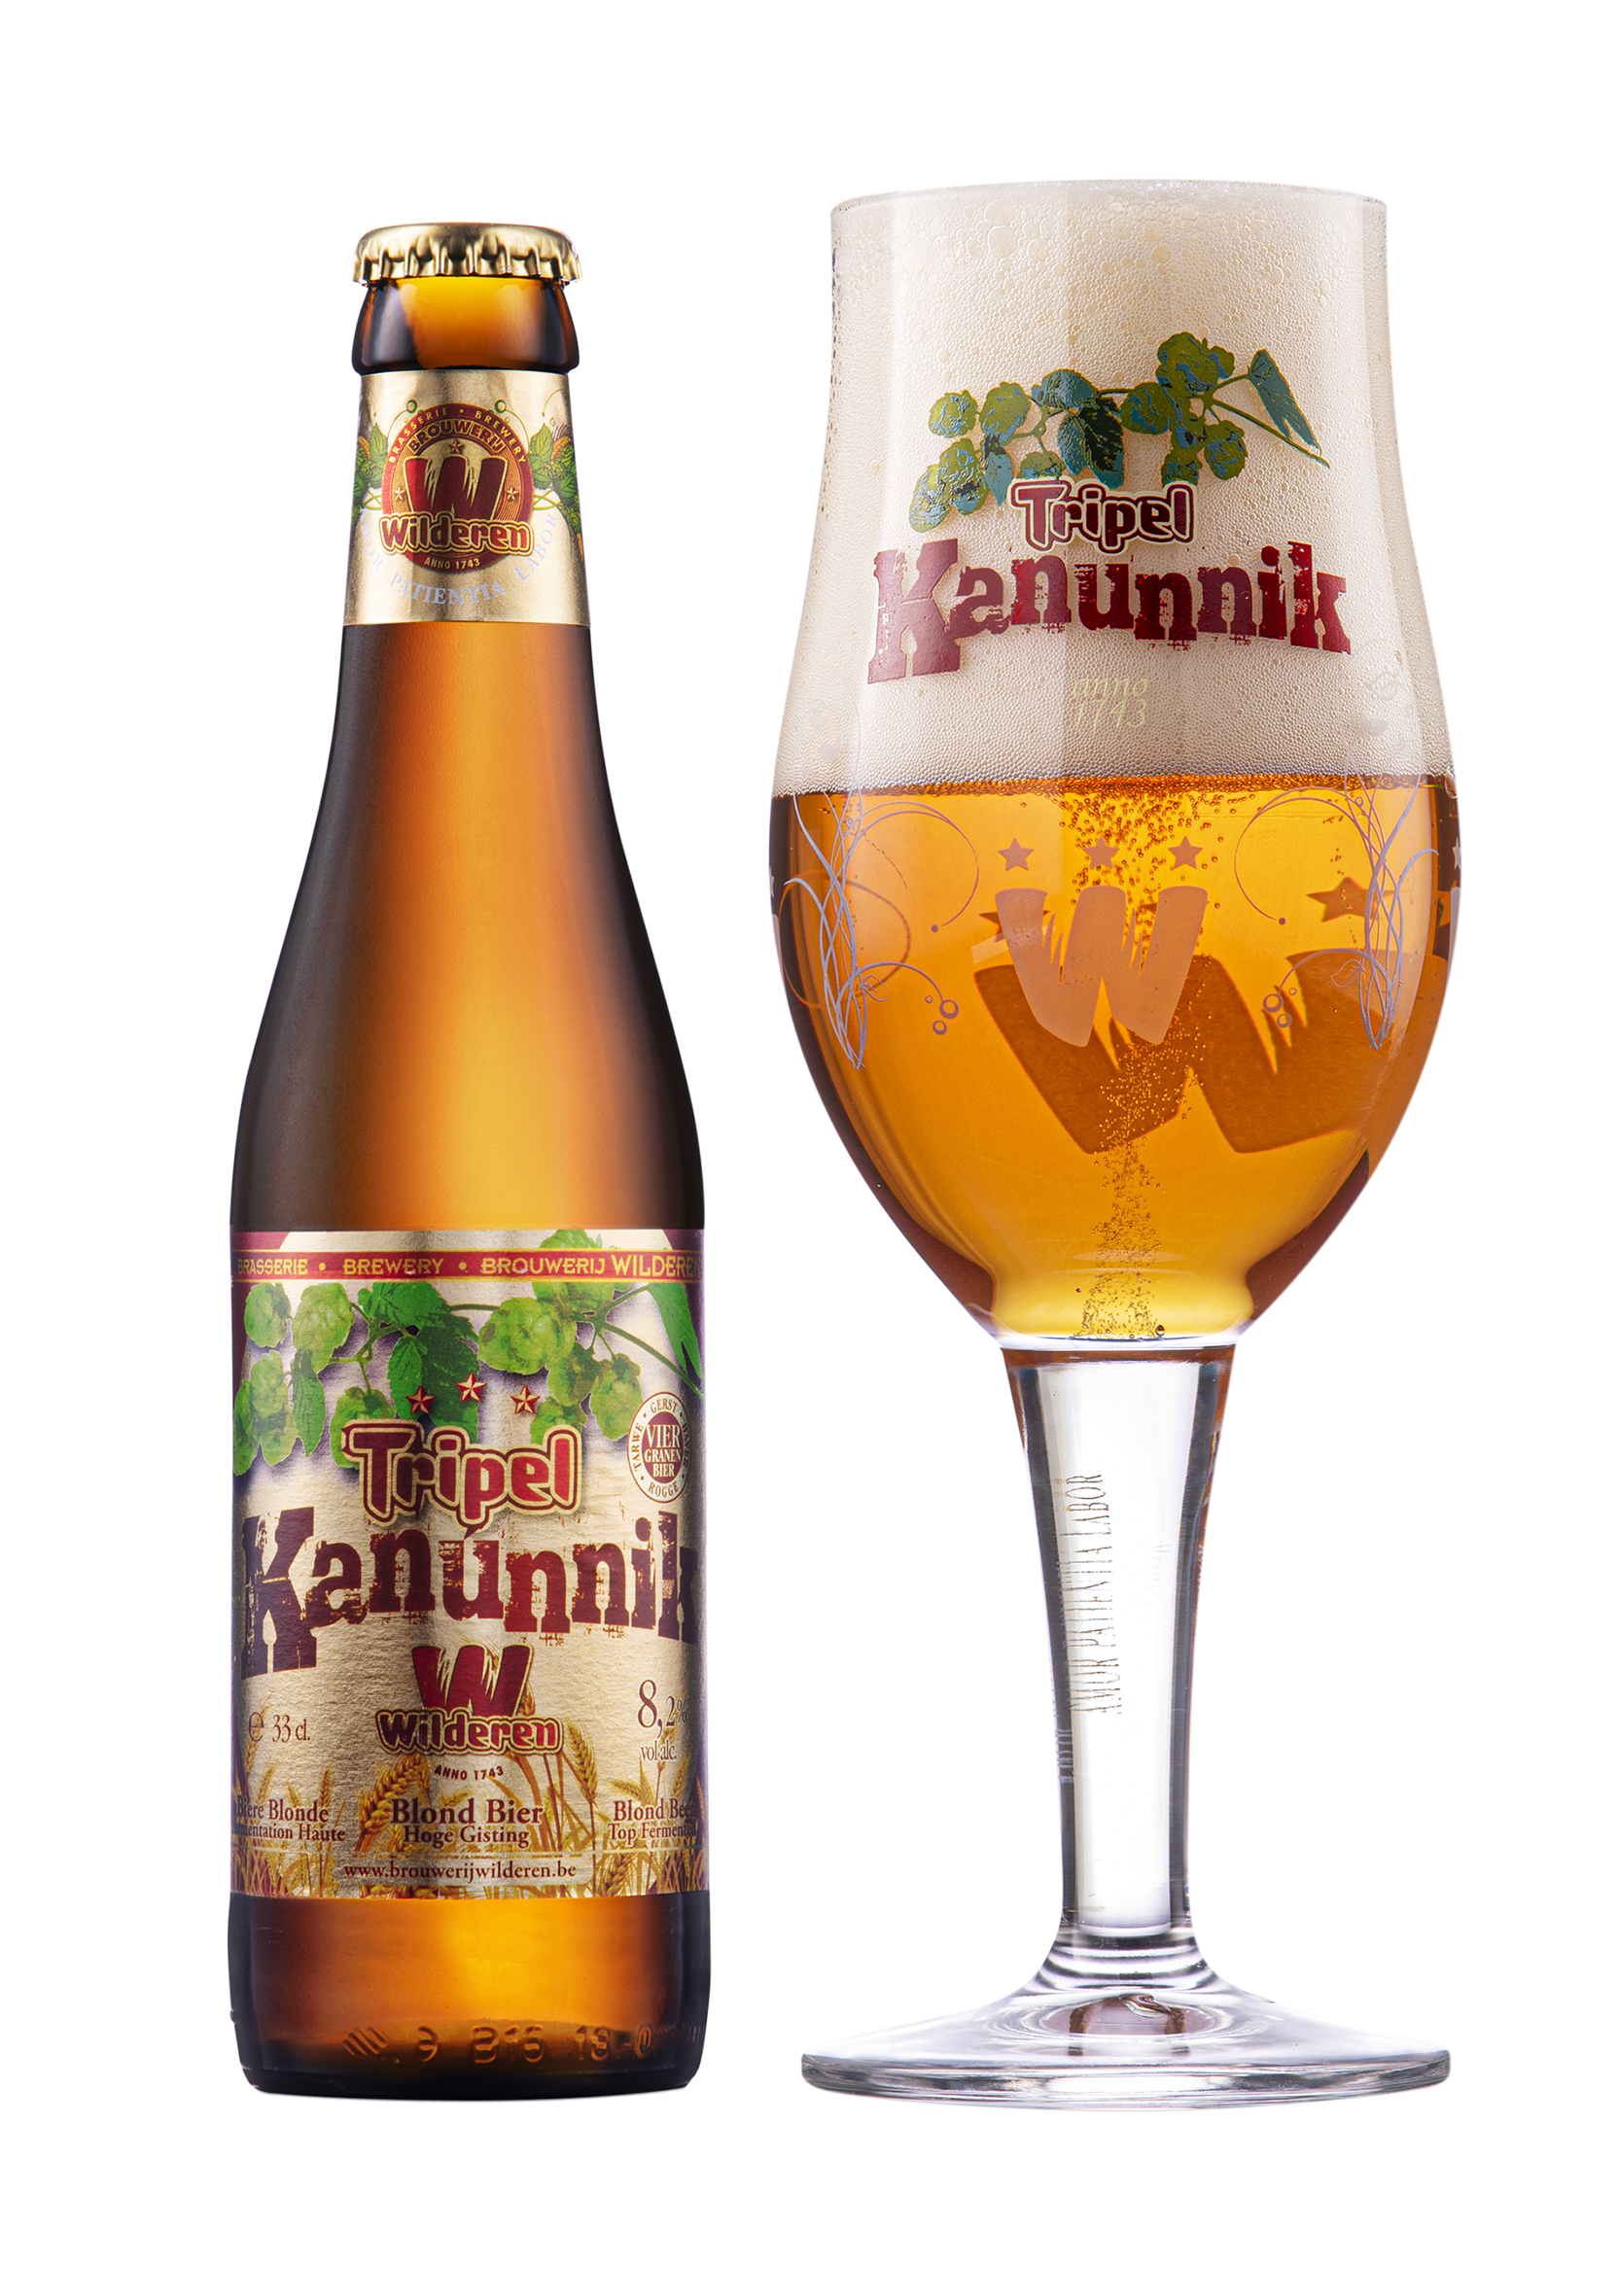 Tripel Kanunnik is a 4-grain beer brewed to an original Wilderen ‘canon’ recipe